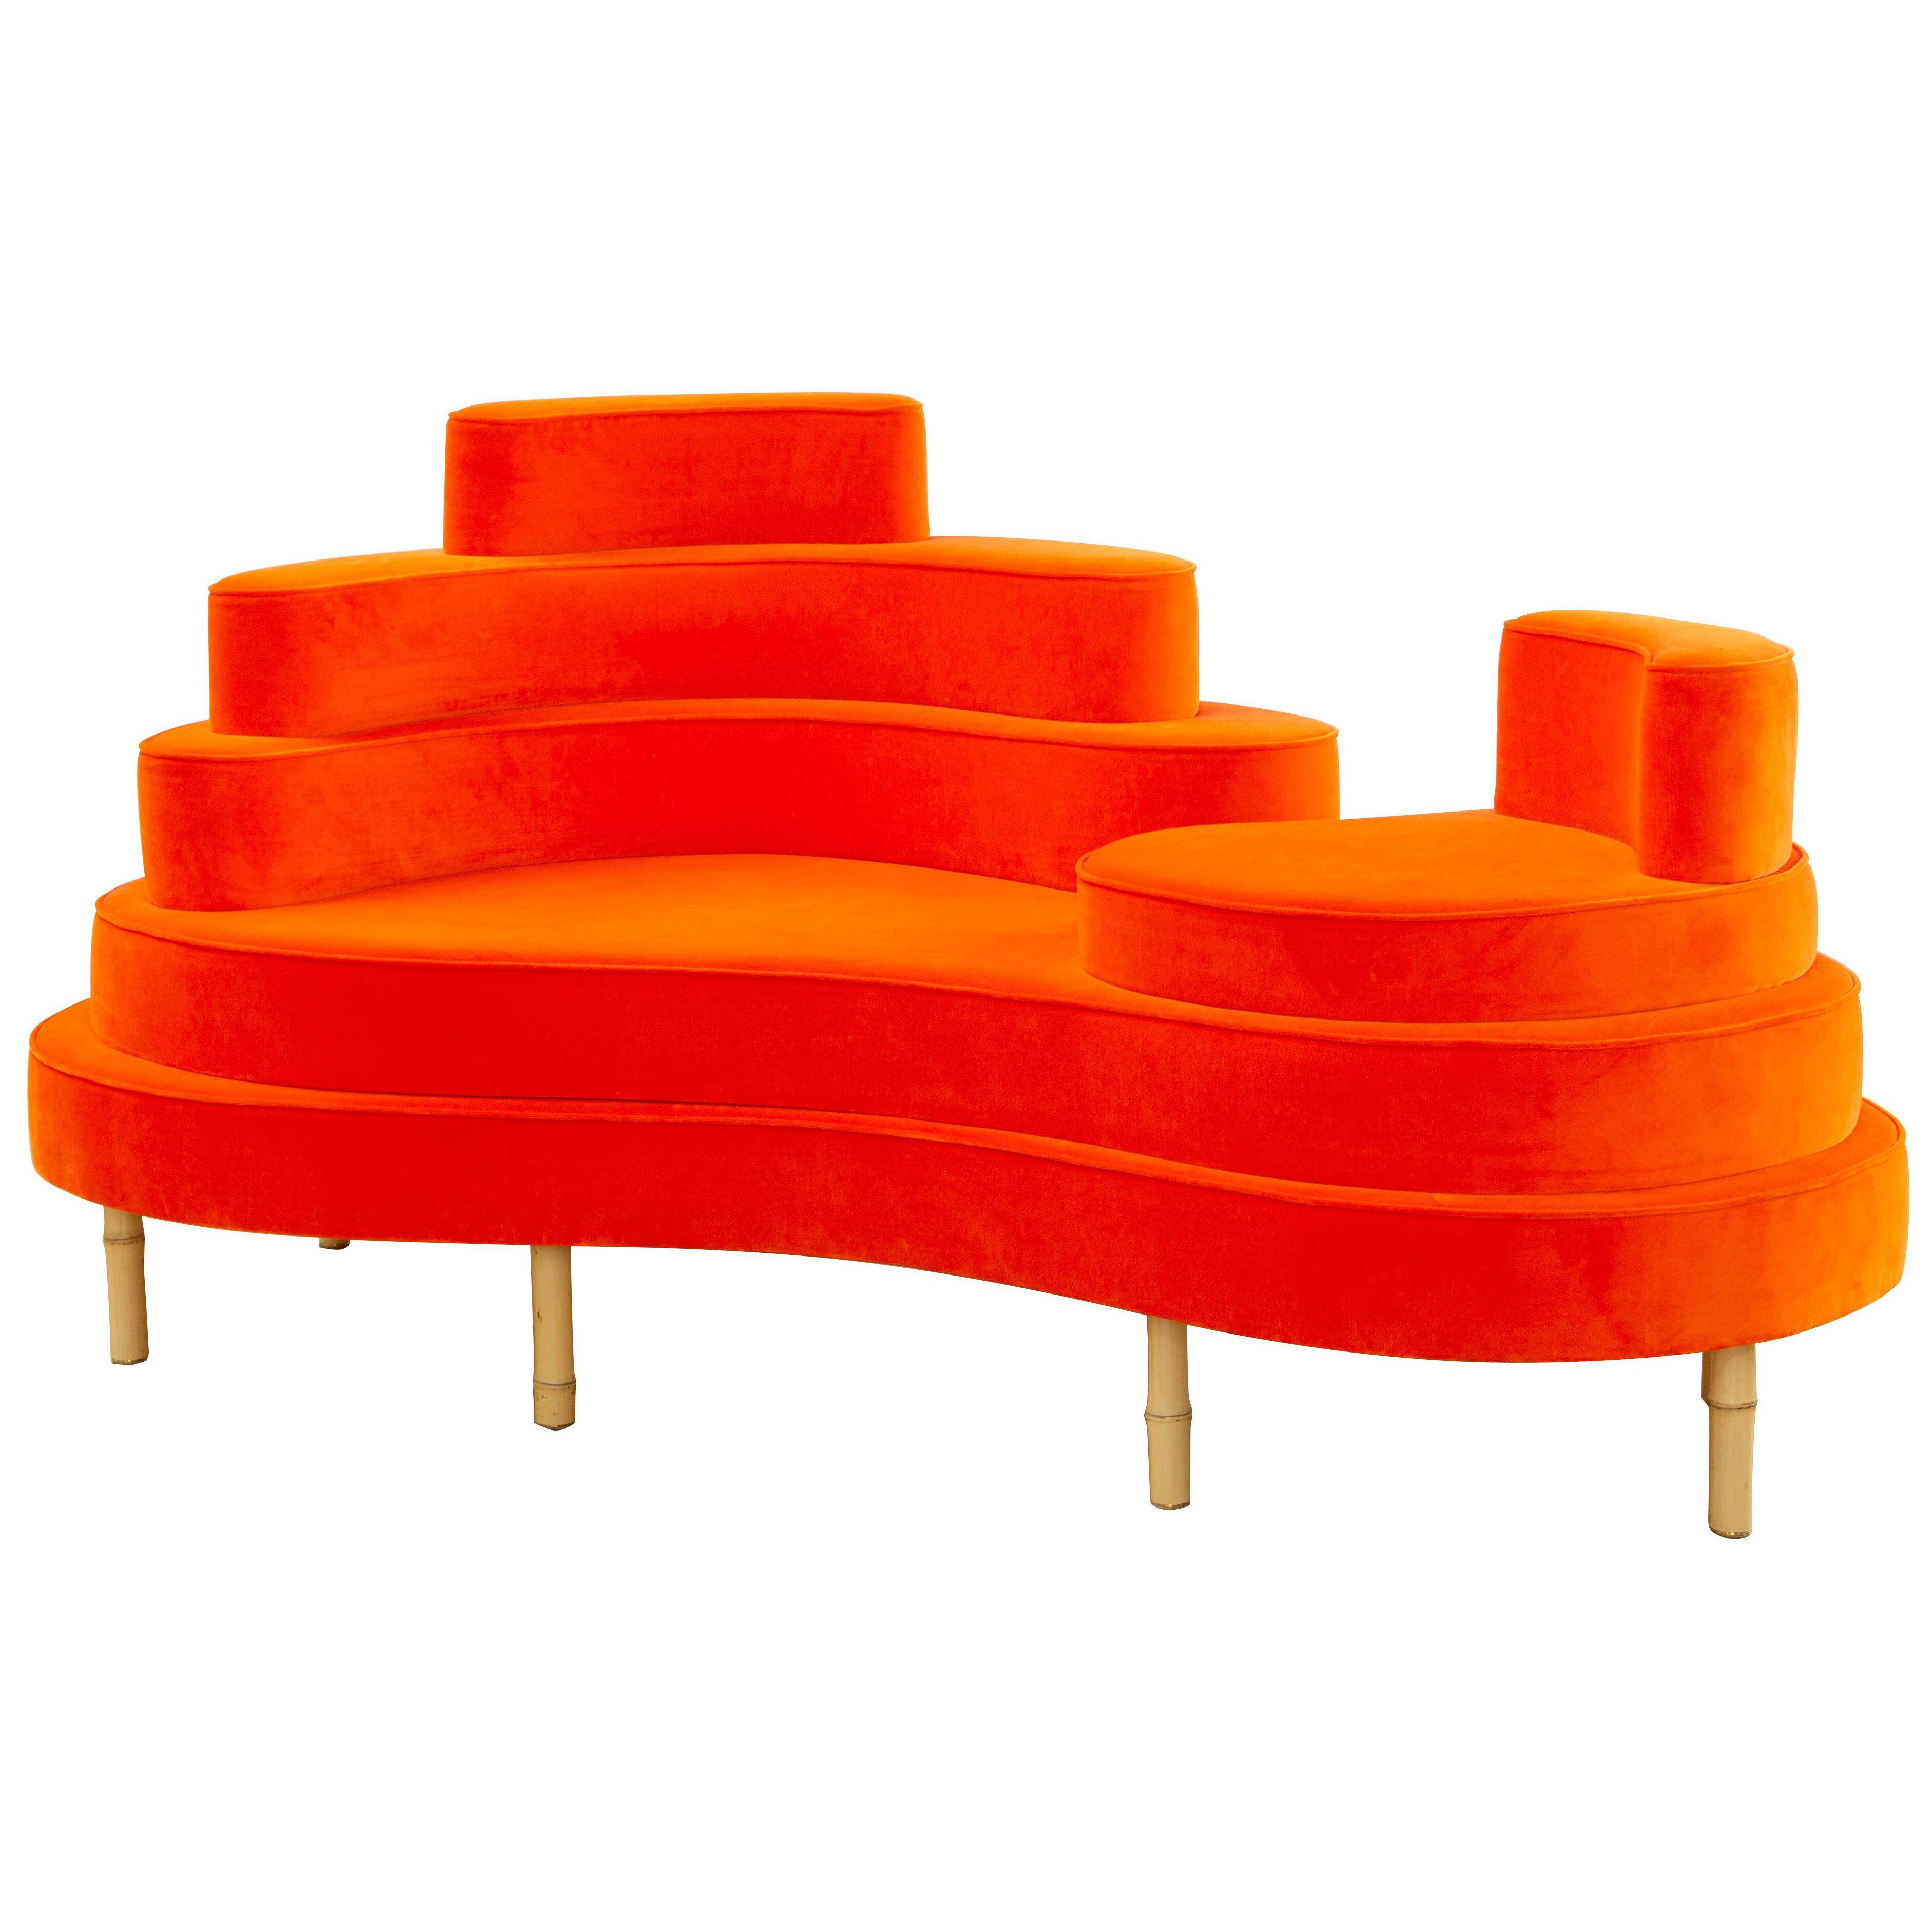 BATIKI bright orange - chaiselongue / sofa island